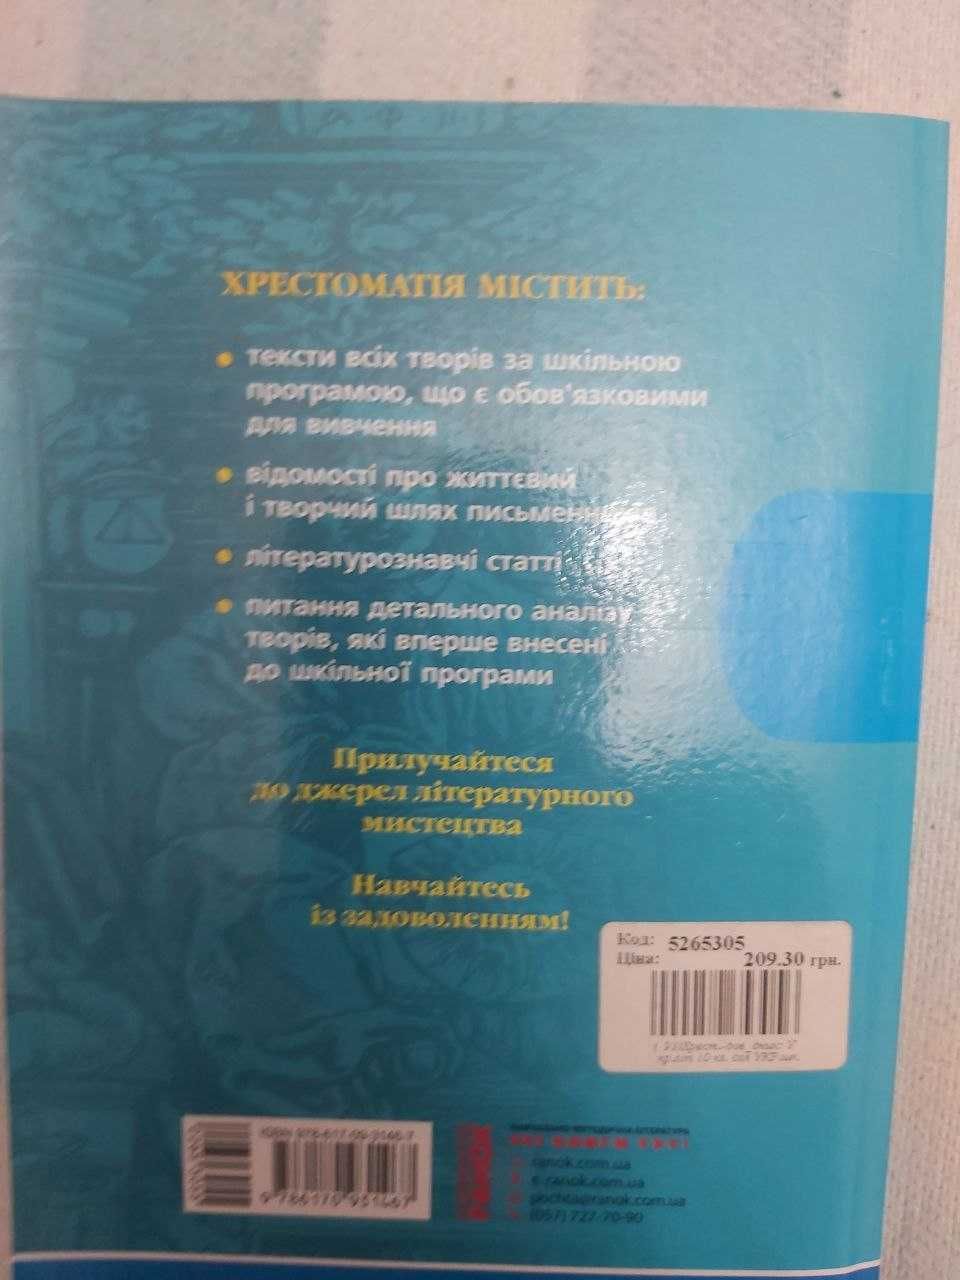 Нові книгиУкраїнска література 10 класс